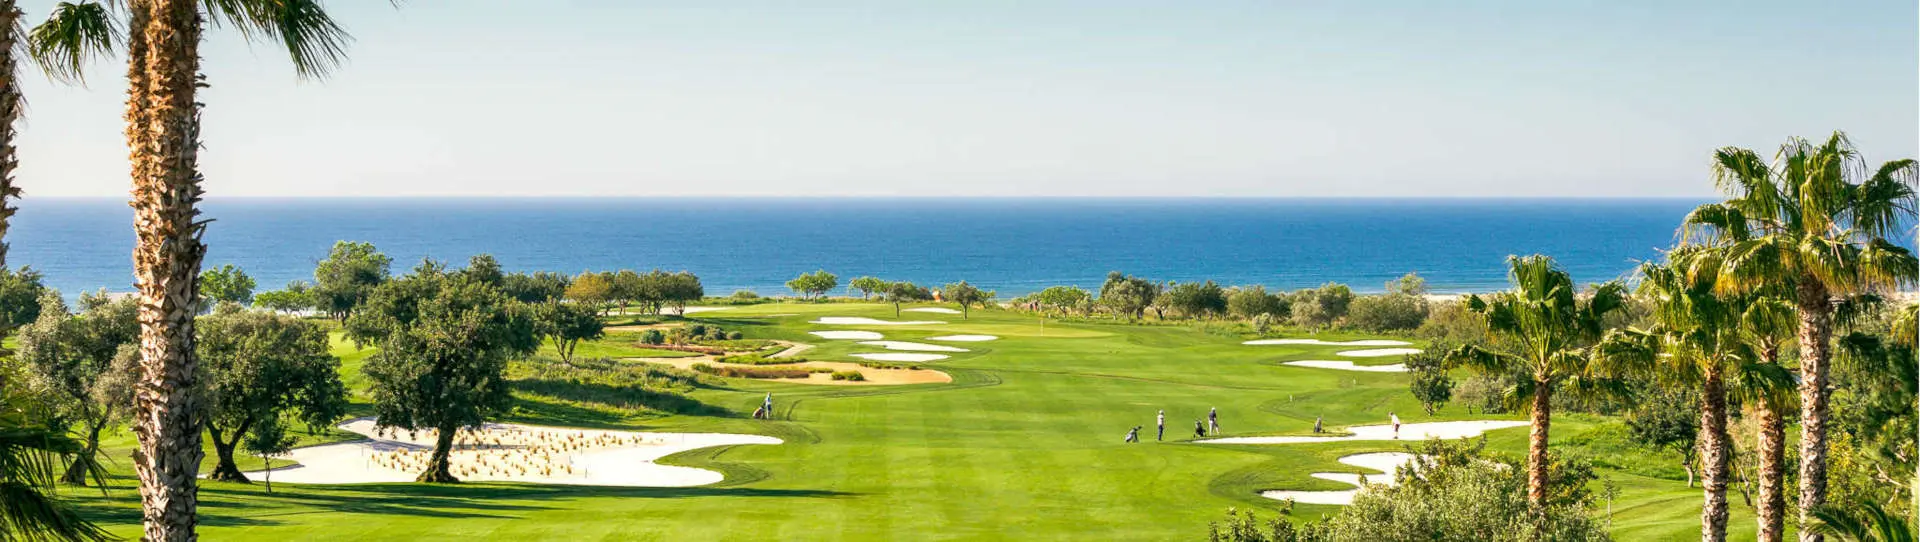 Portugal golf holidays - Premium East Algarve Golf Package - Photo 1